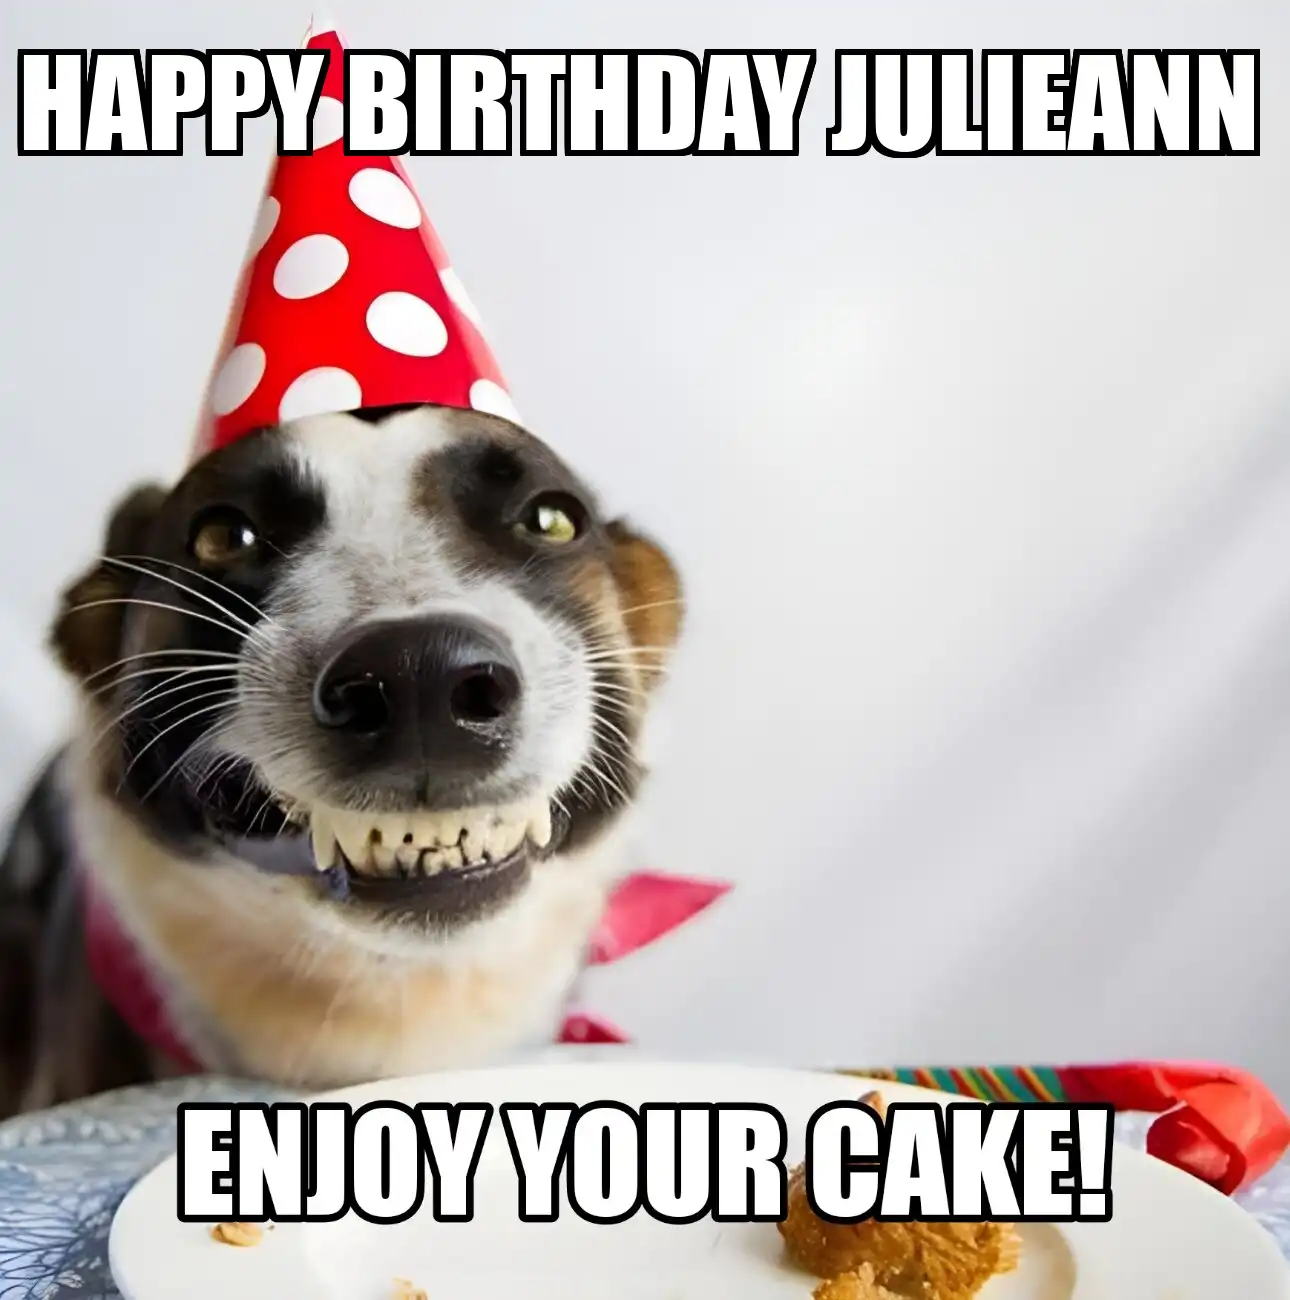 Happy Birthday Julieann Enjoy Your Cake Dog Meme